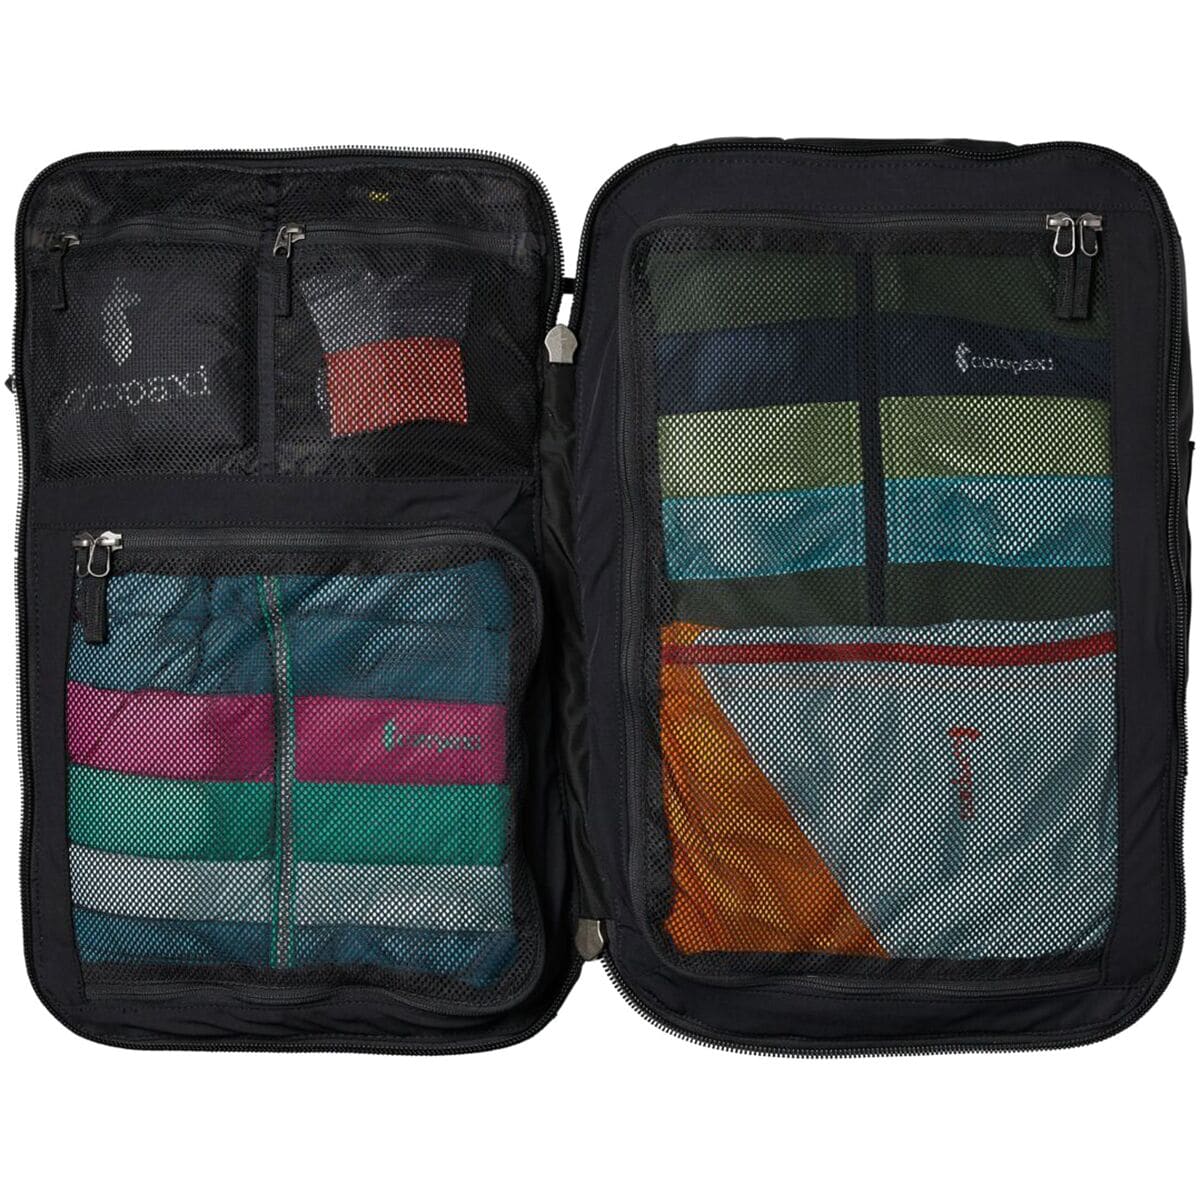 Cotopaxi Allpa 35L Travel Pack | Backcountry.com